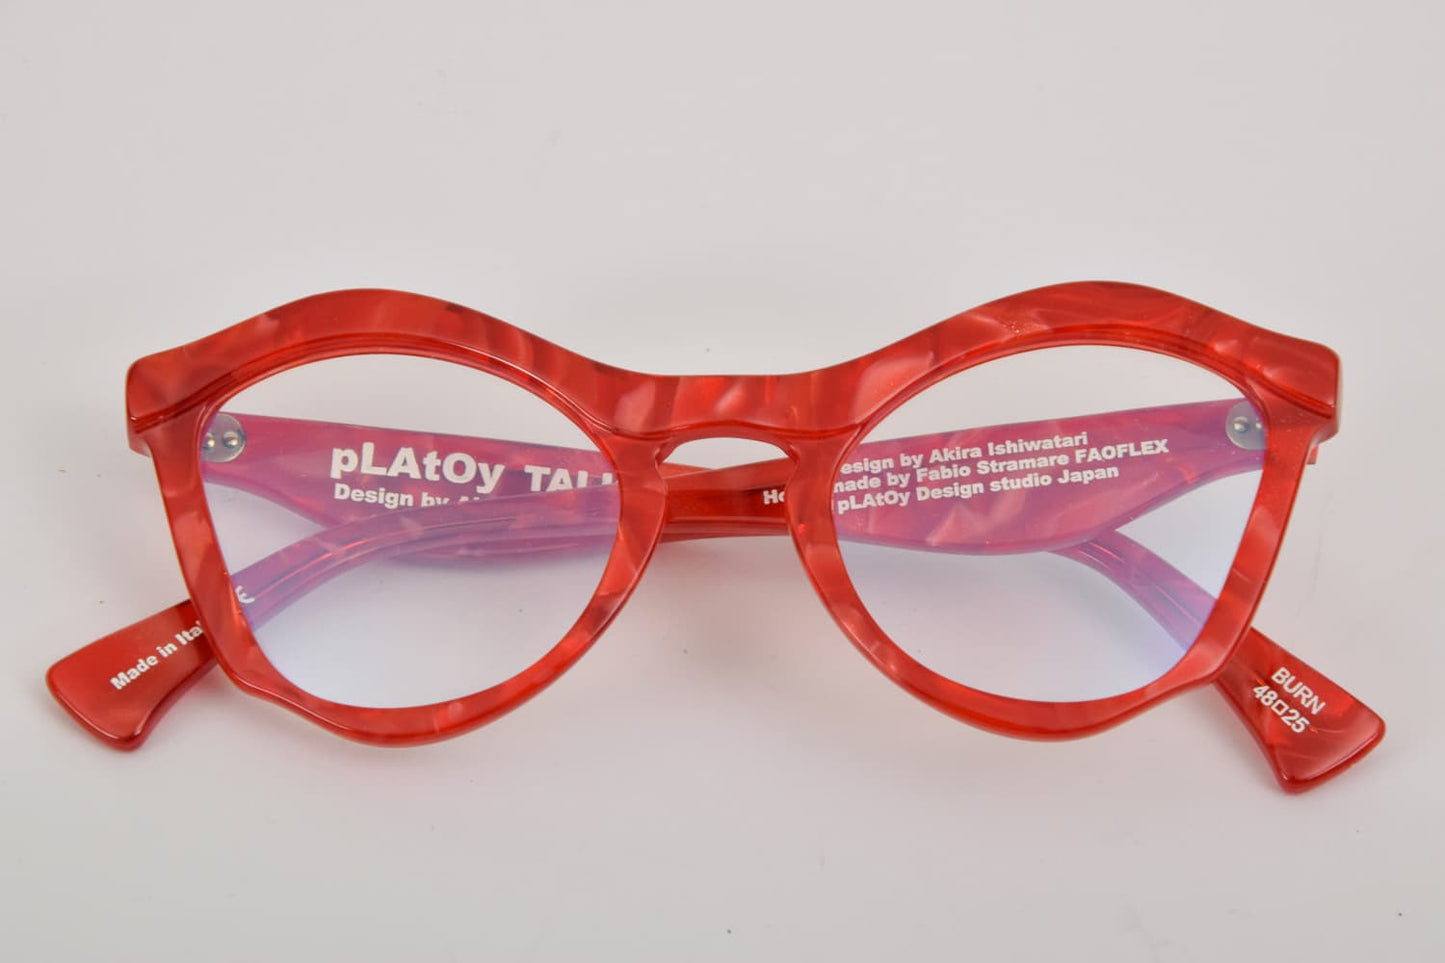 Platoy | Talico | Rosso Marmo